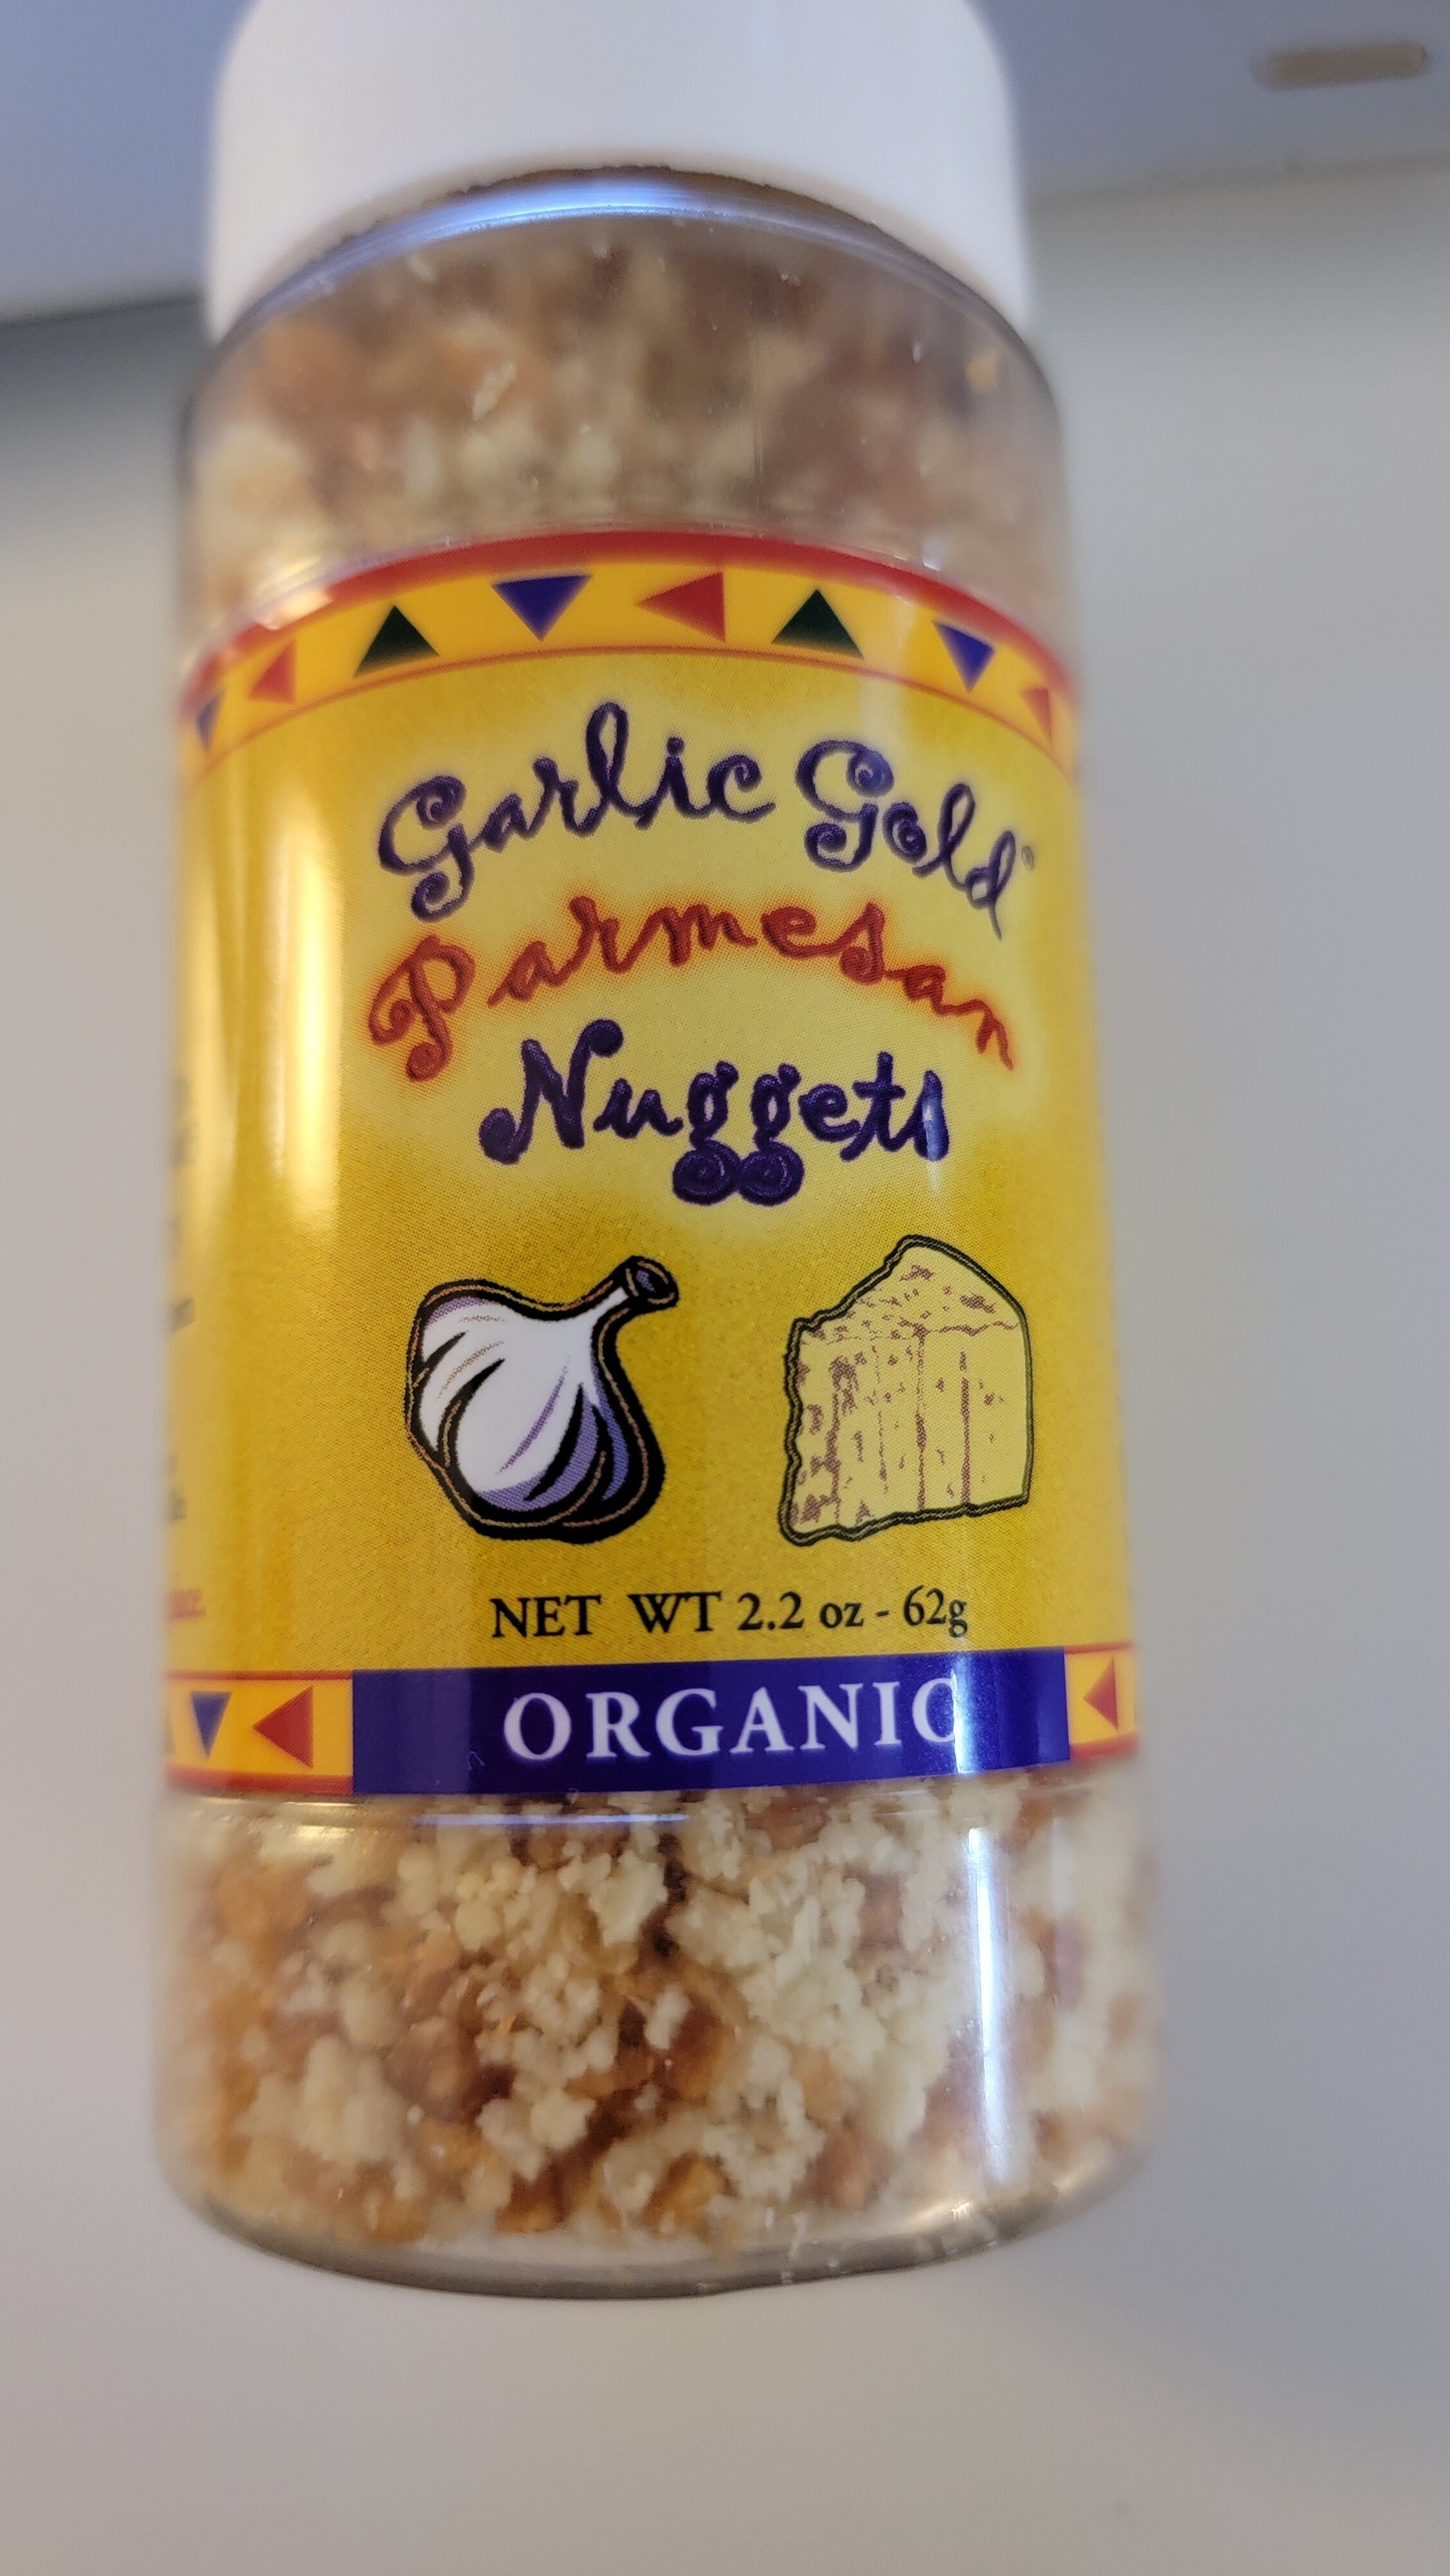 Garlic Gold Parmesan Nuggets (Organic) - Produkt - en